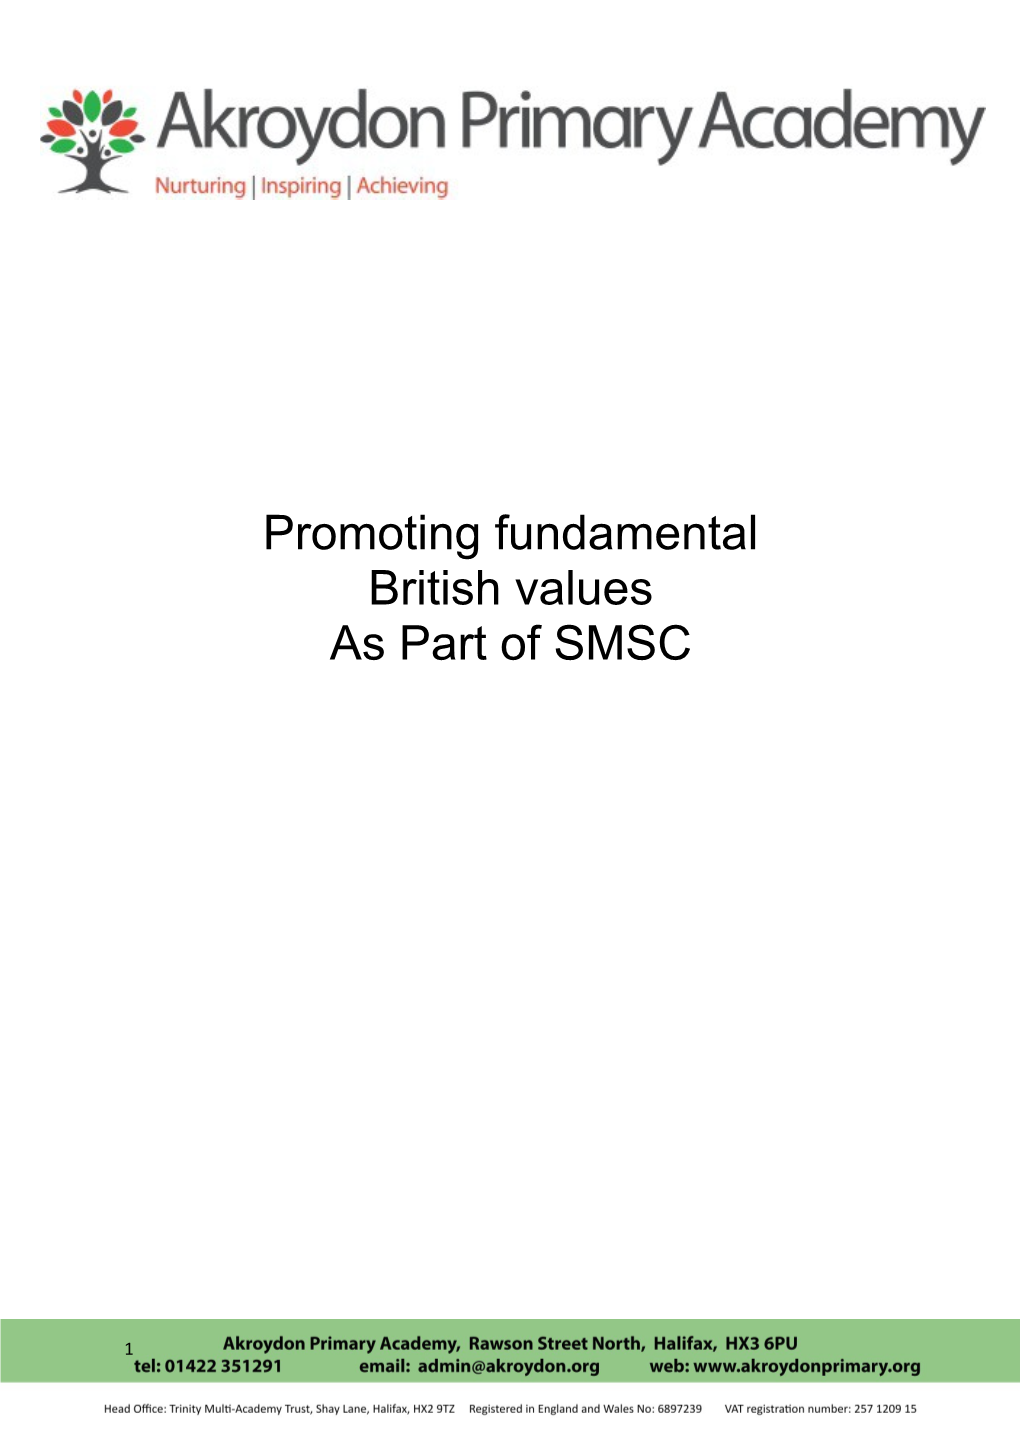 Promoting Fundamental